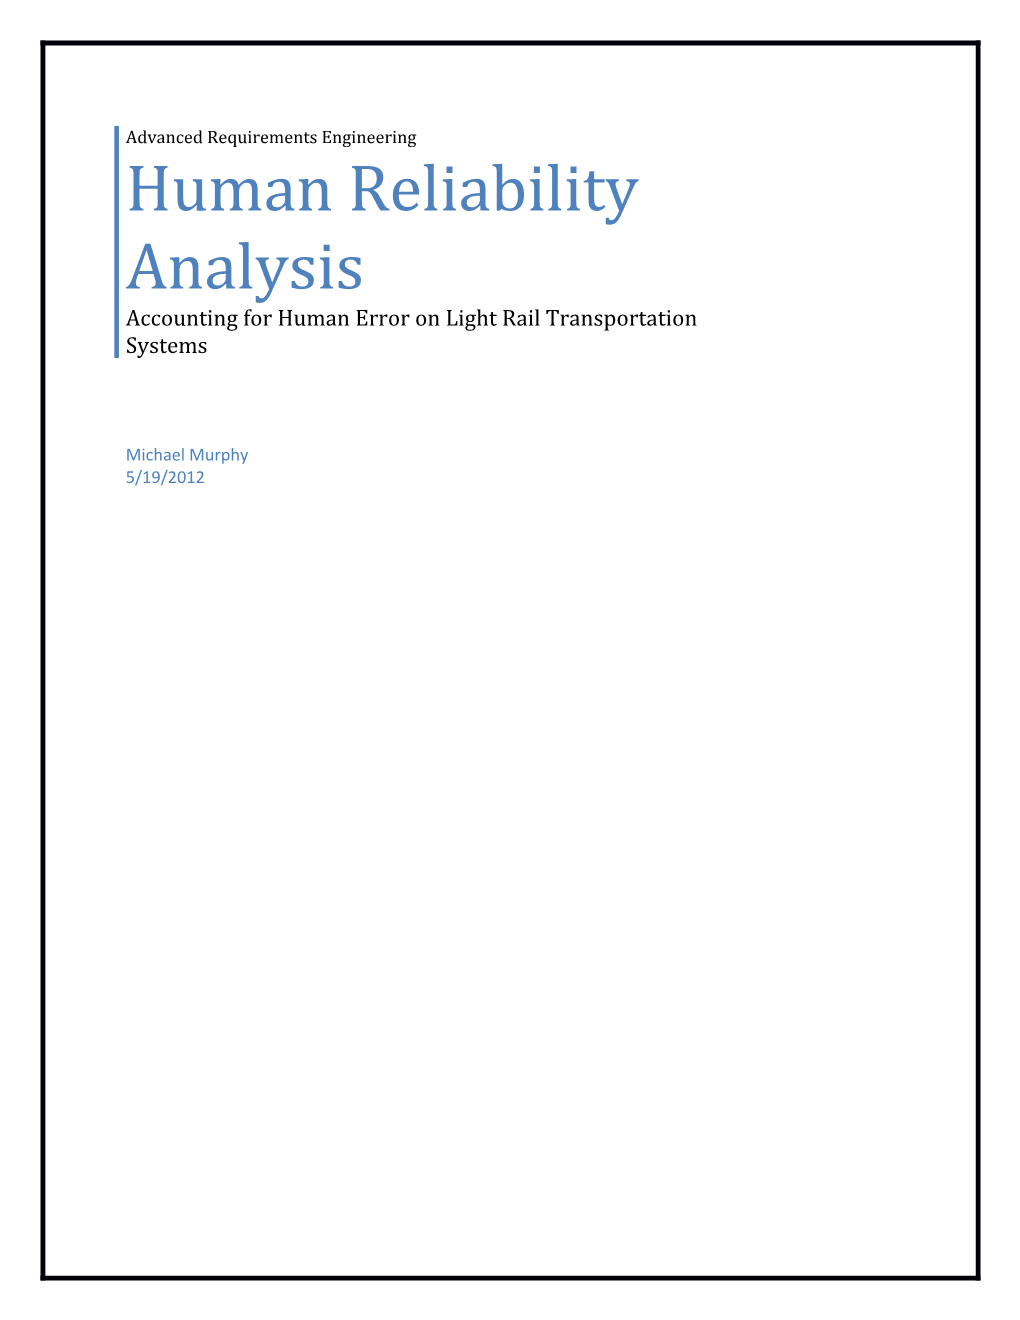 Human Reliability Analysis